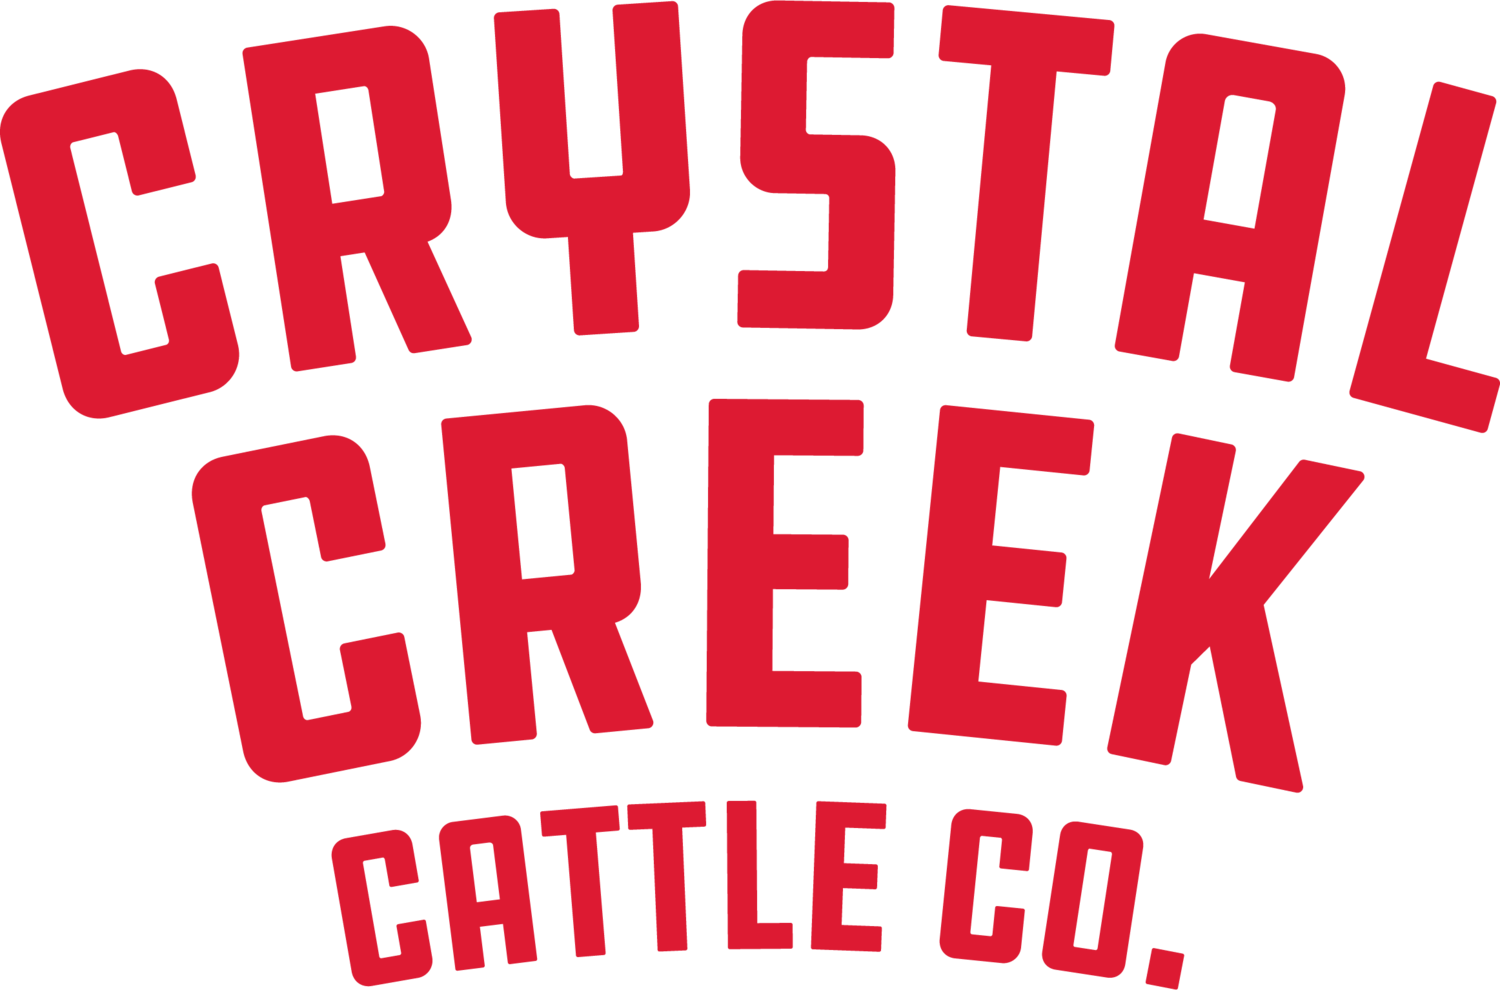 Crystal Creek Cattle Co.